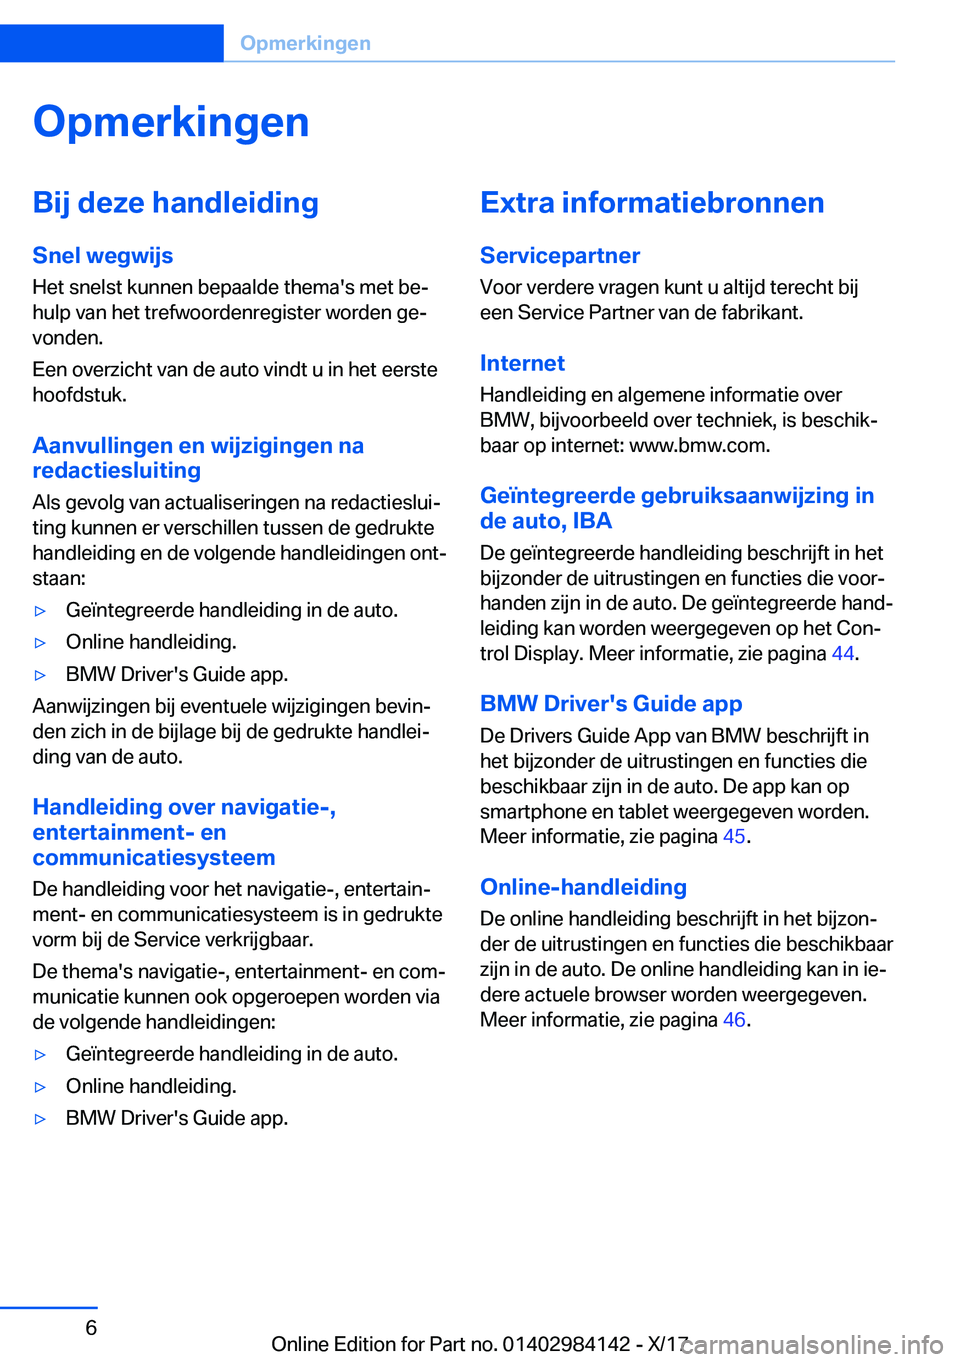 BMW 2 SERIES COUPE 2018  Instructieboekjes (in Dutch) �O�p�m�e�r�k�i�n�g�e�n�B�i�j��d�e�z�e��h�a�n�d�l�e�i�d�i�n�g�S�n�e�l��w�e�g�w�i�j�s
�H�e�t� �s�n�e�l�s�t� �k�u�n�n�e�n� �b�e�p�a�a�l�d�e� �t�h�e�m�a�'�s� �m�e�t� �b�ej
�h�u�l�p� �v�a�n� �h�e�t